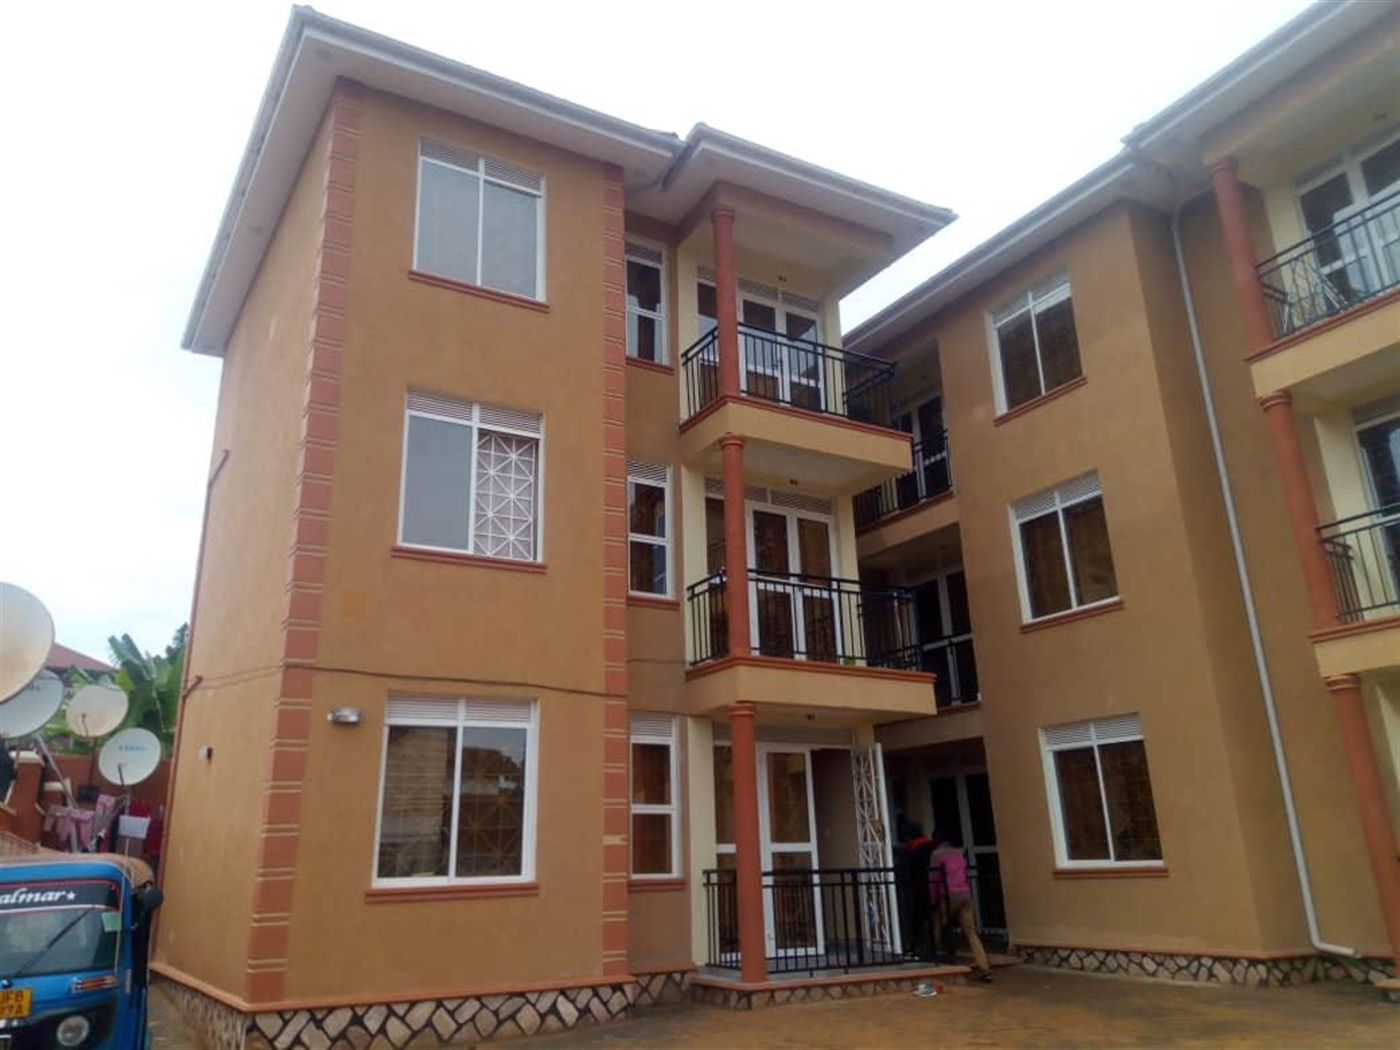 Apartment block for sale in Wakaliga Kampala